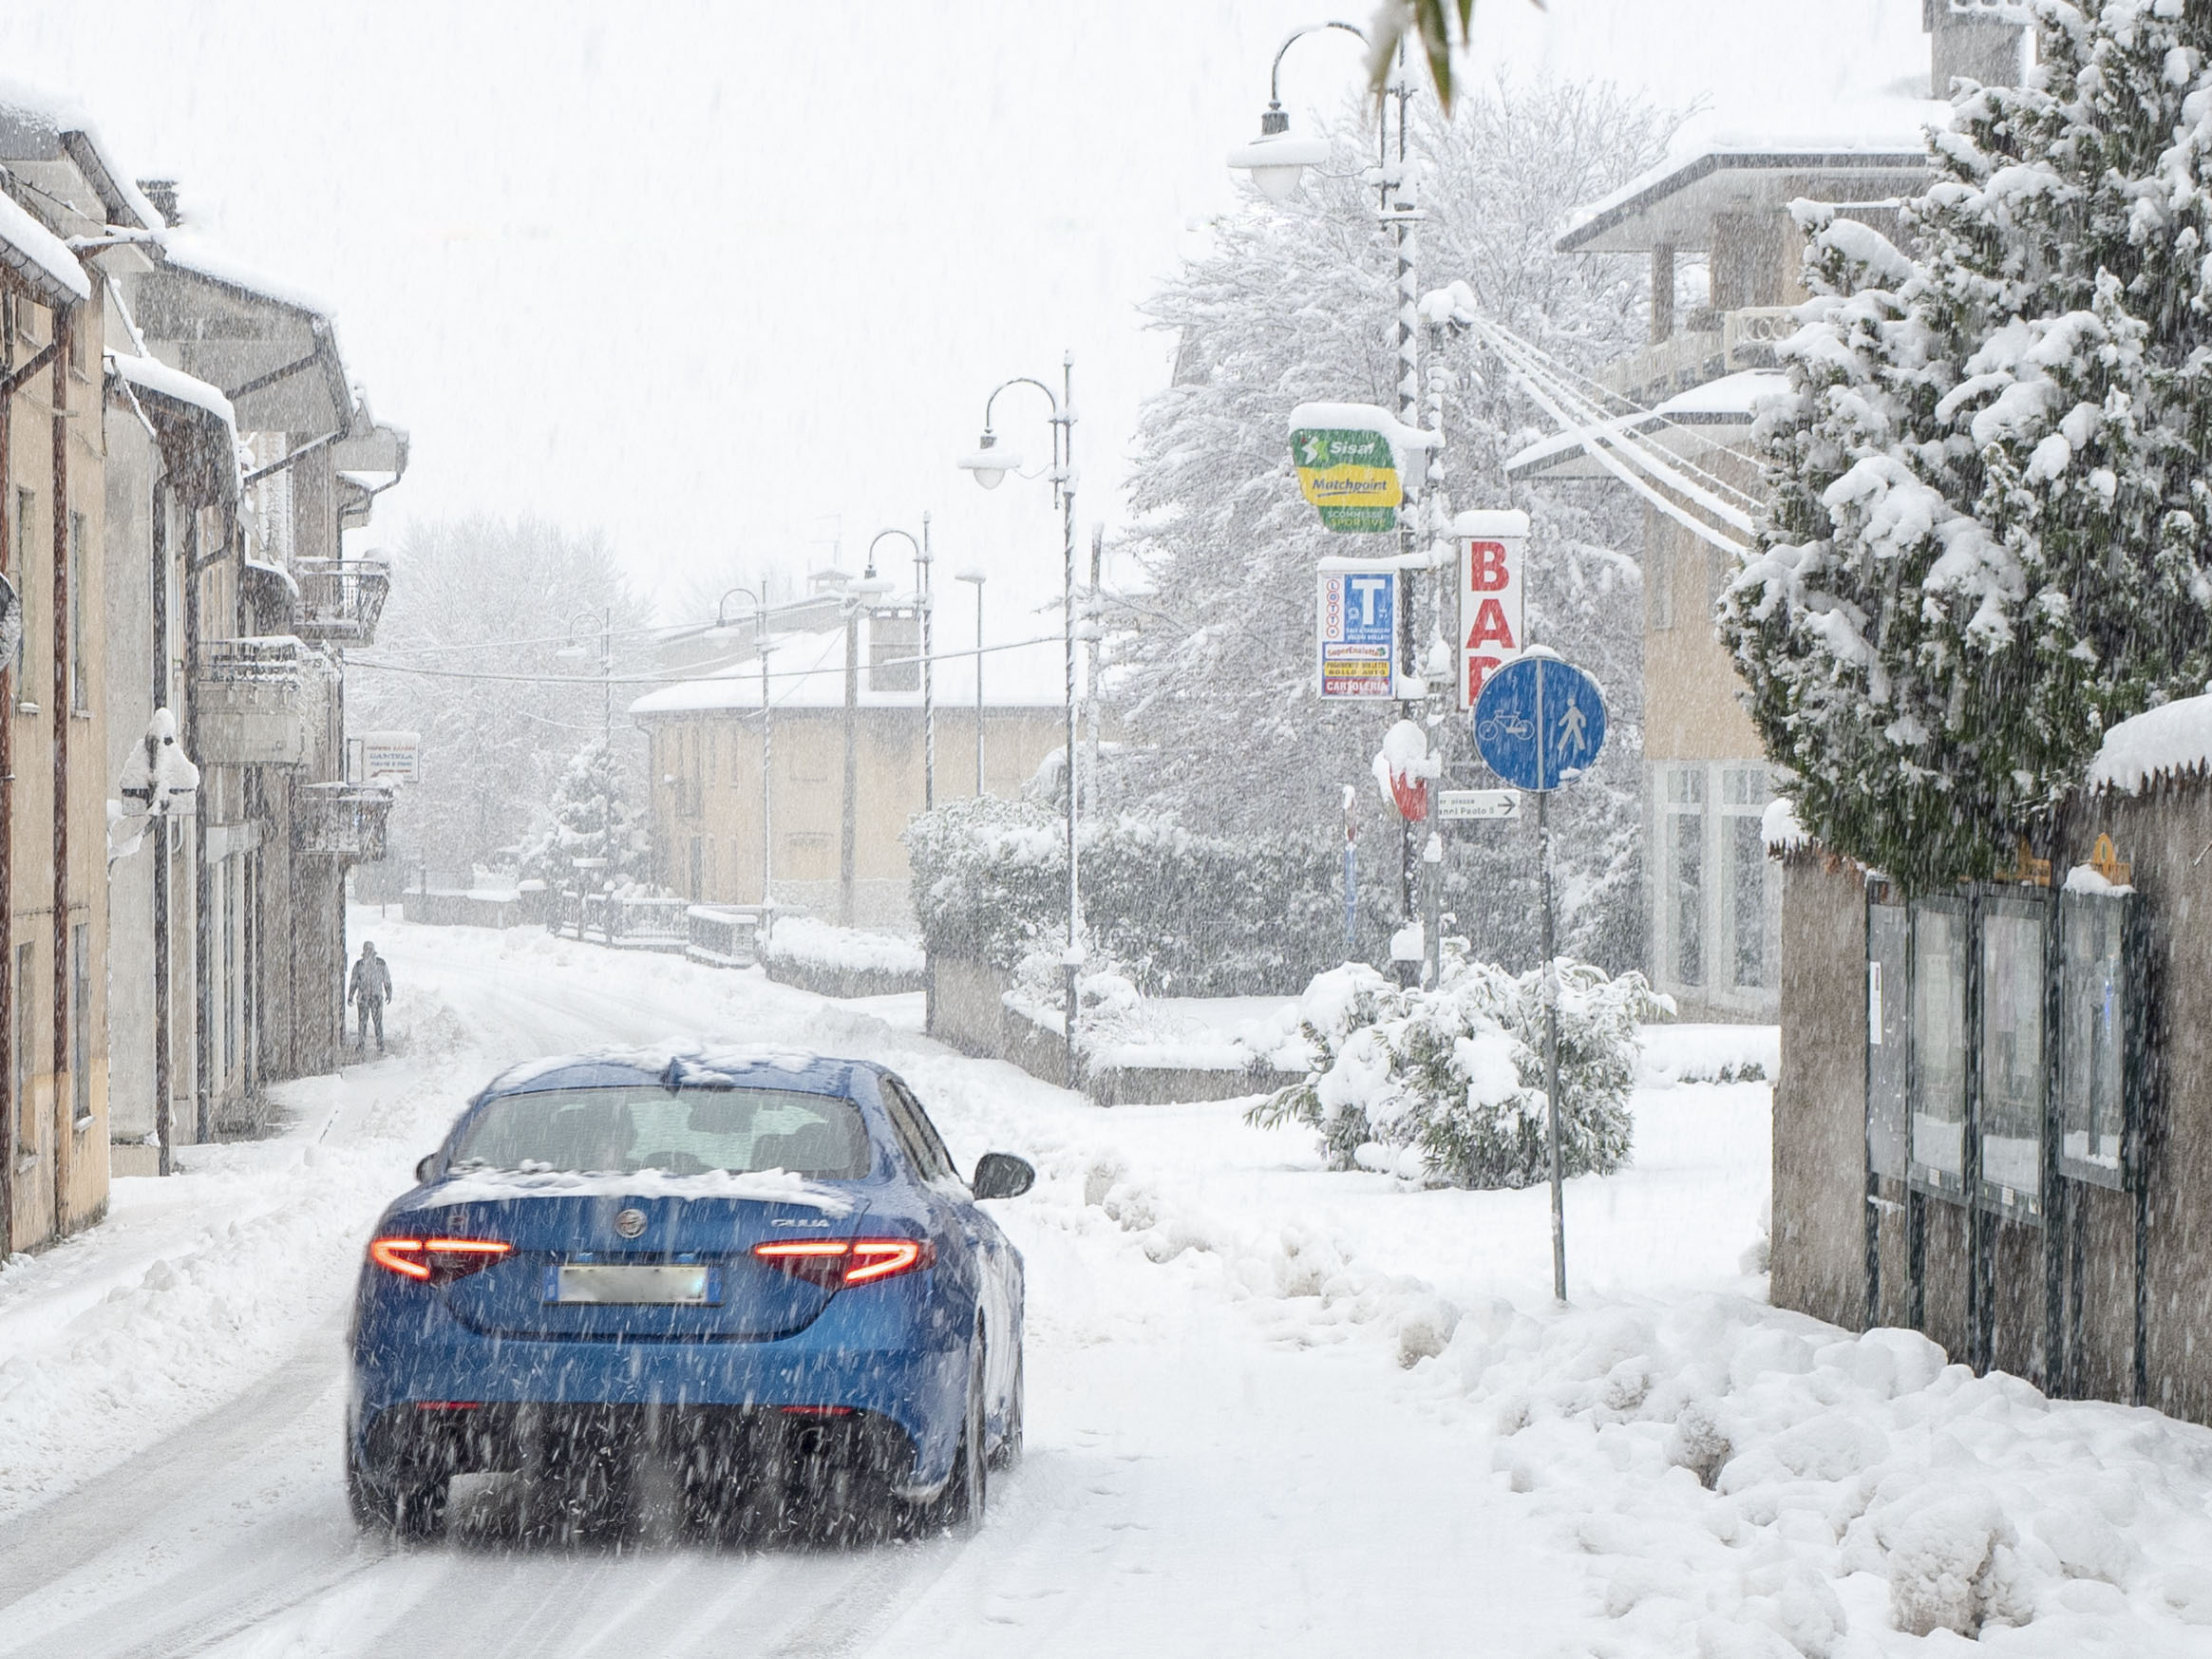 snows on the Giulia......